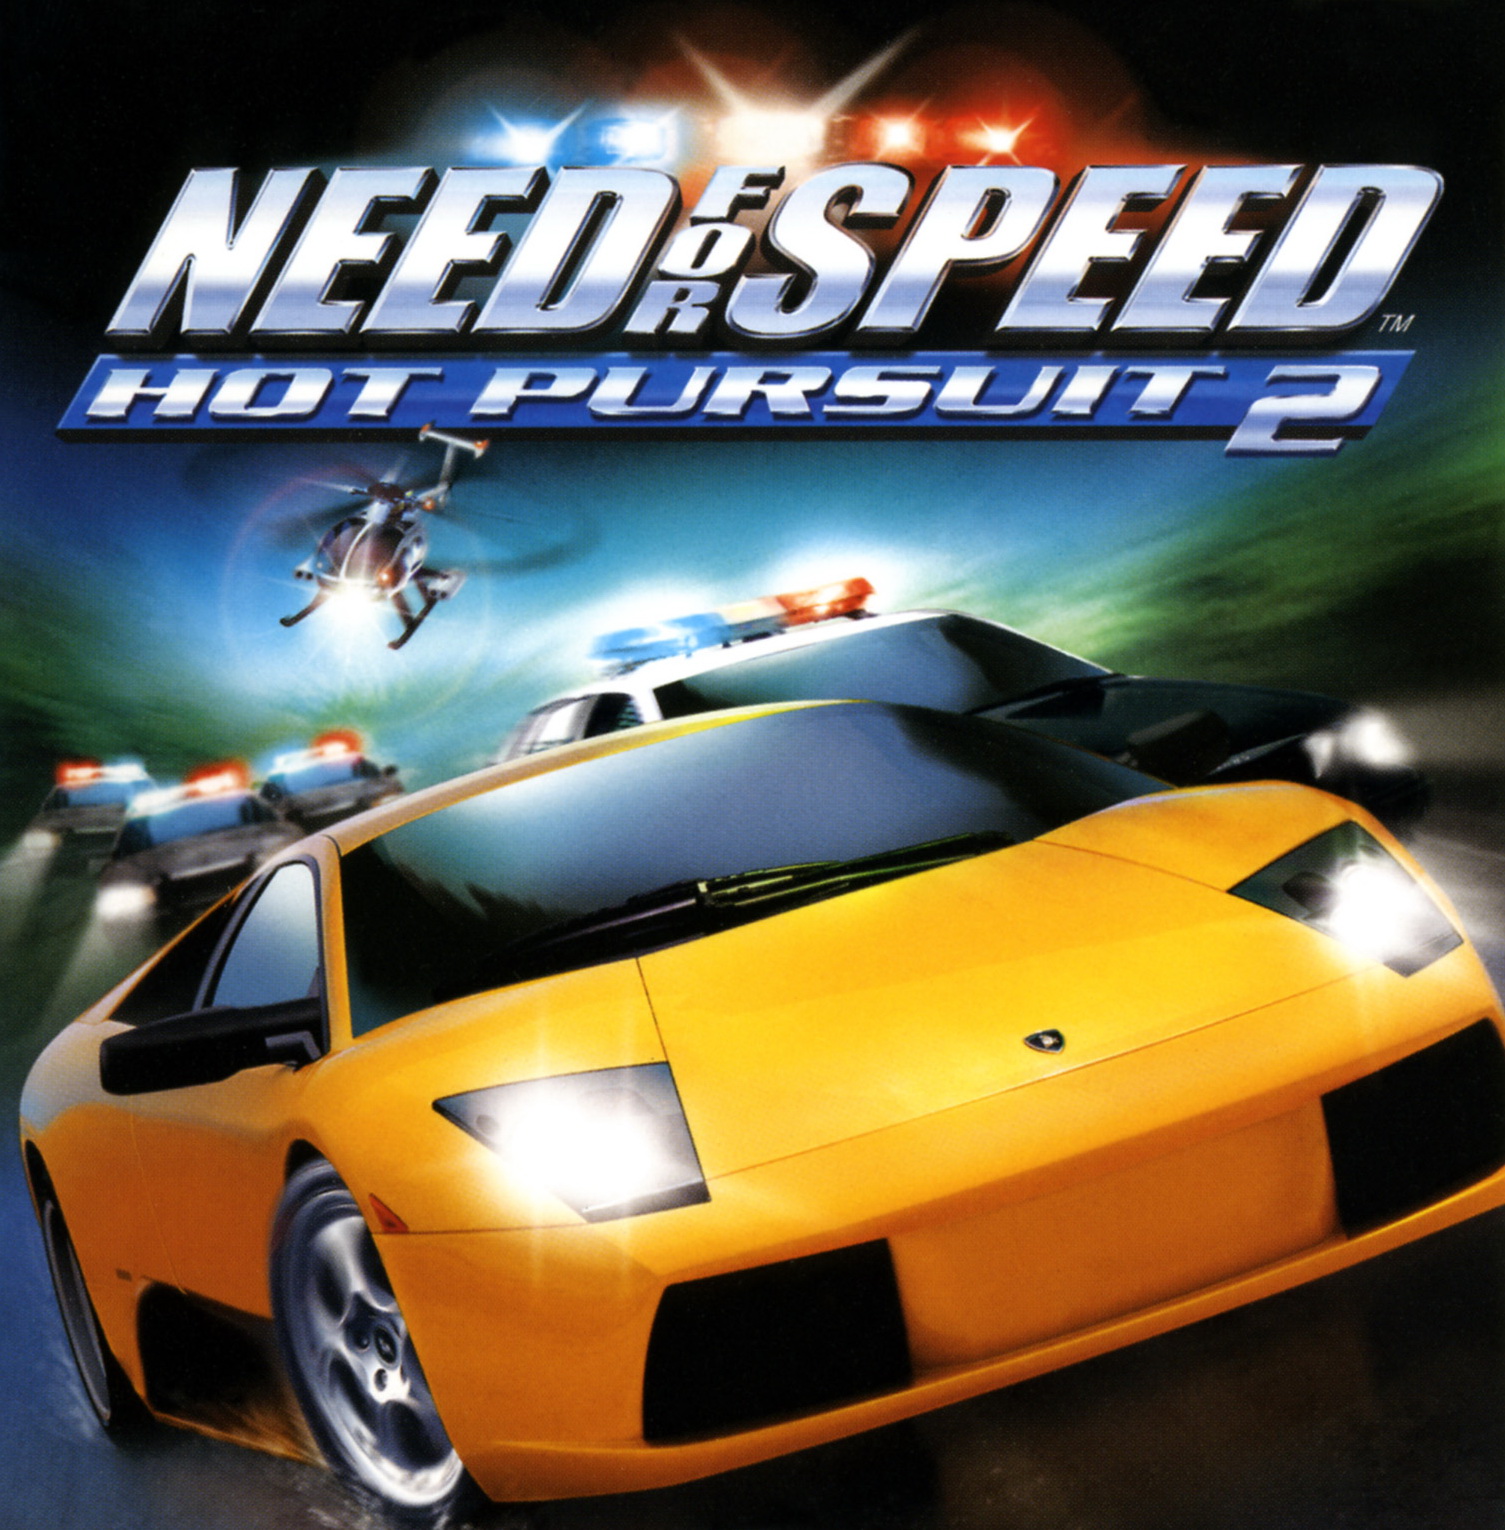 Песни из игры недфорспид. Need for Speed hot Pursuit 2. Need for Speed диск 2002. Need for Speed hot Pursuit 2002. Нфс хот пурсуит 2 2002.